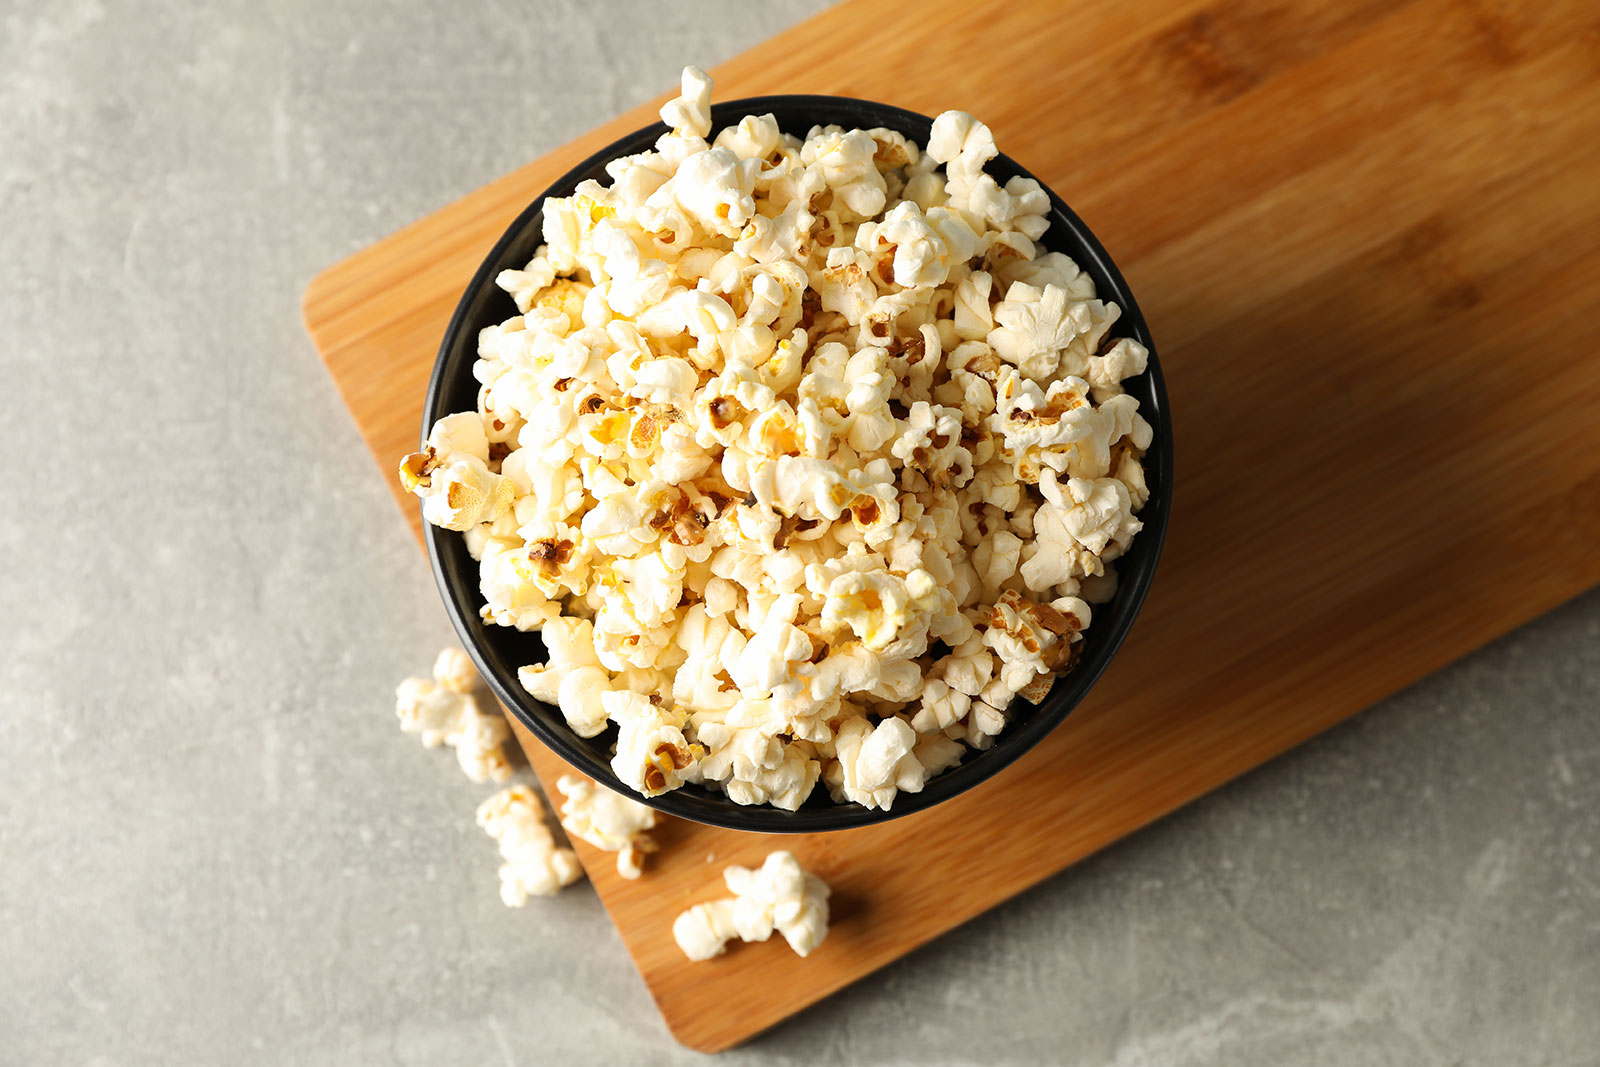 zaatar-spiced popcorn